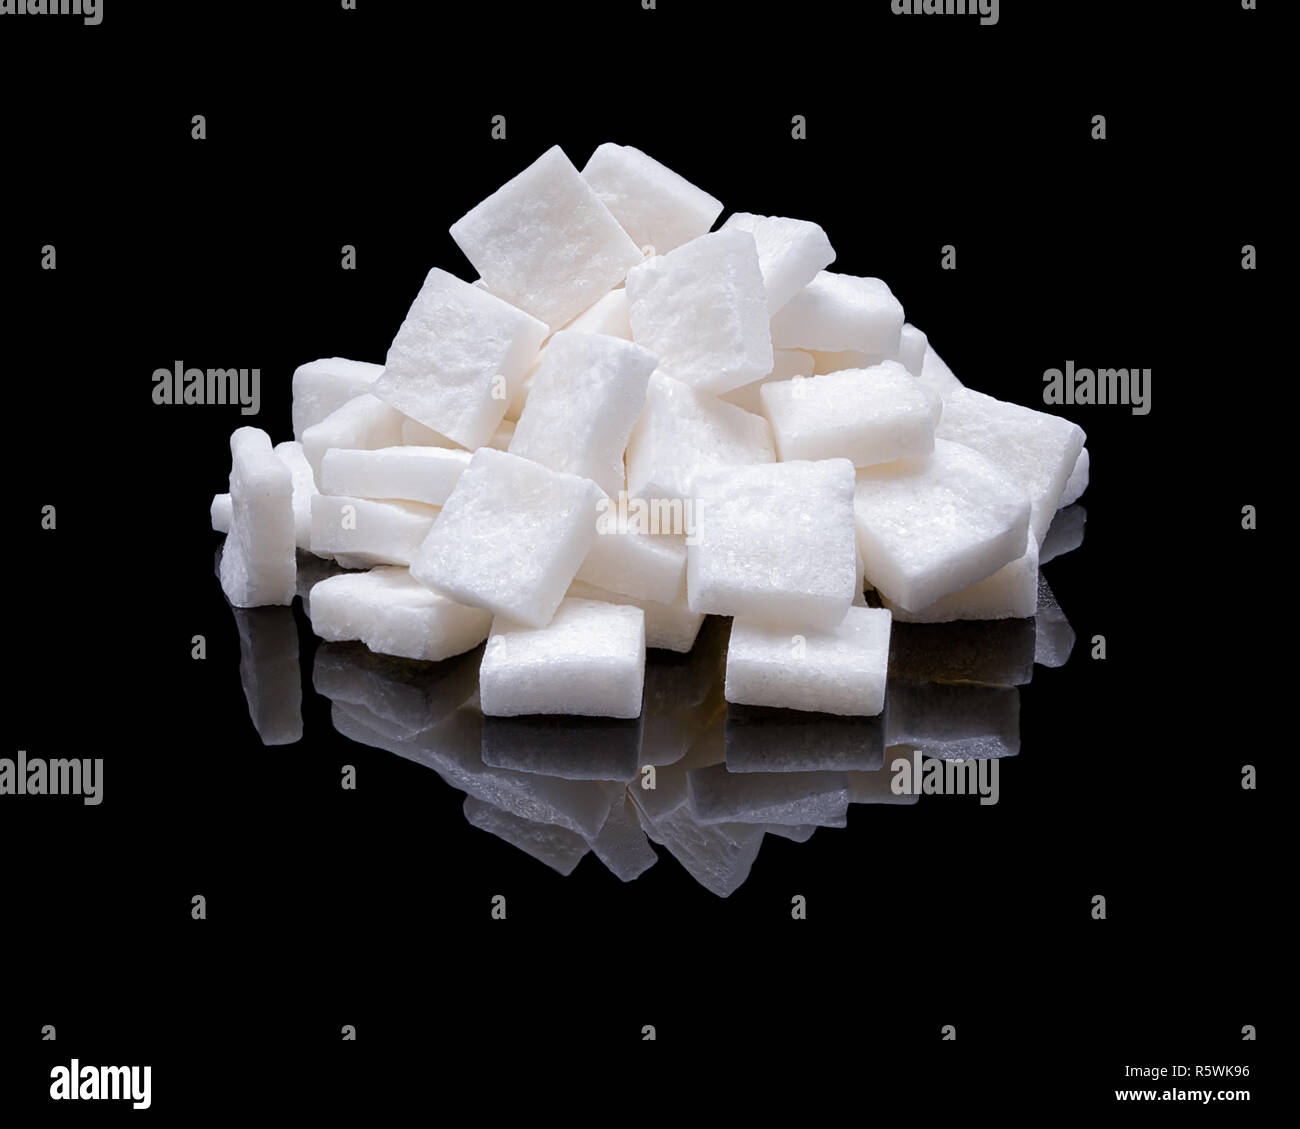 Pile of lump white sugar Stock Photo